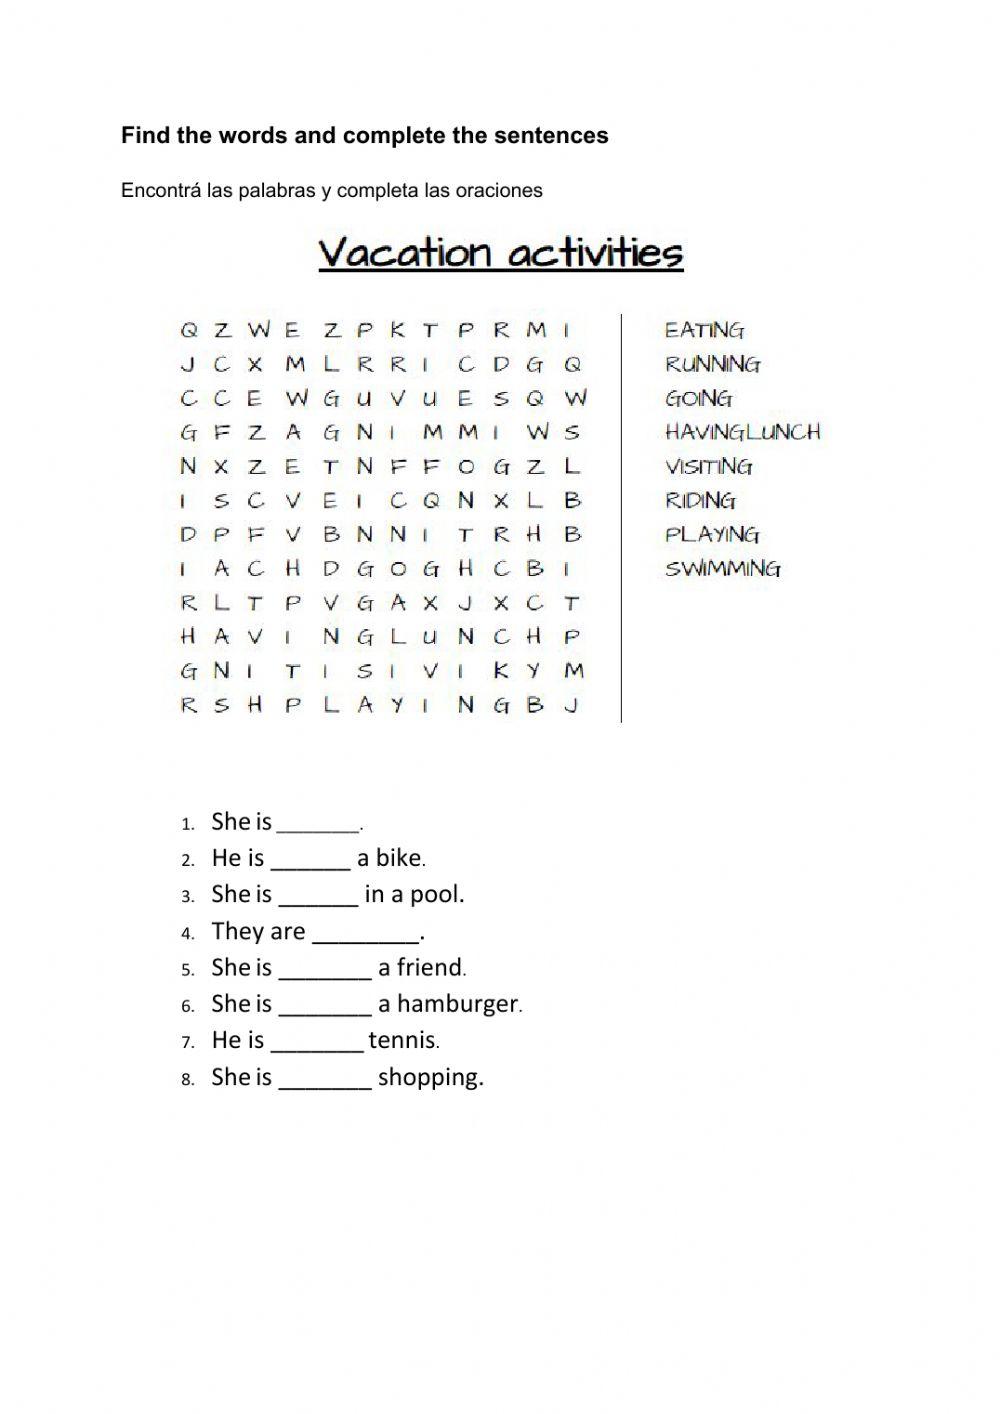 Vacation activities